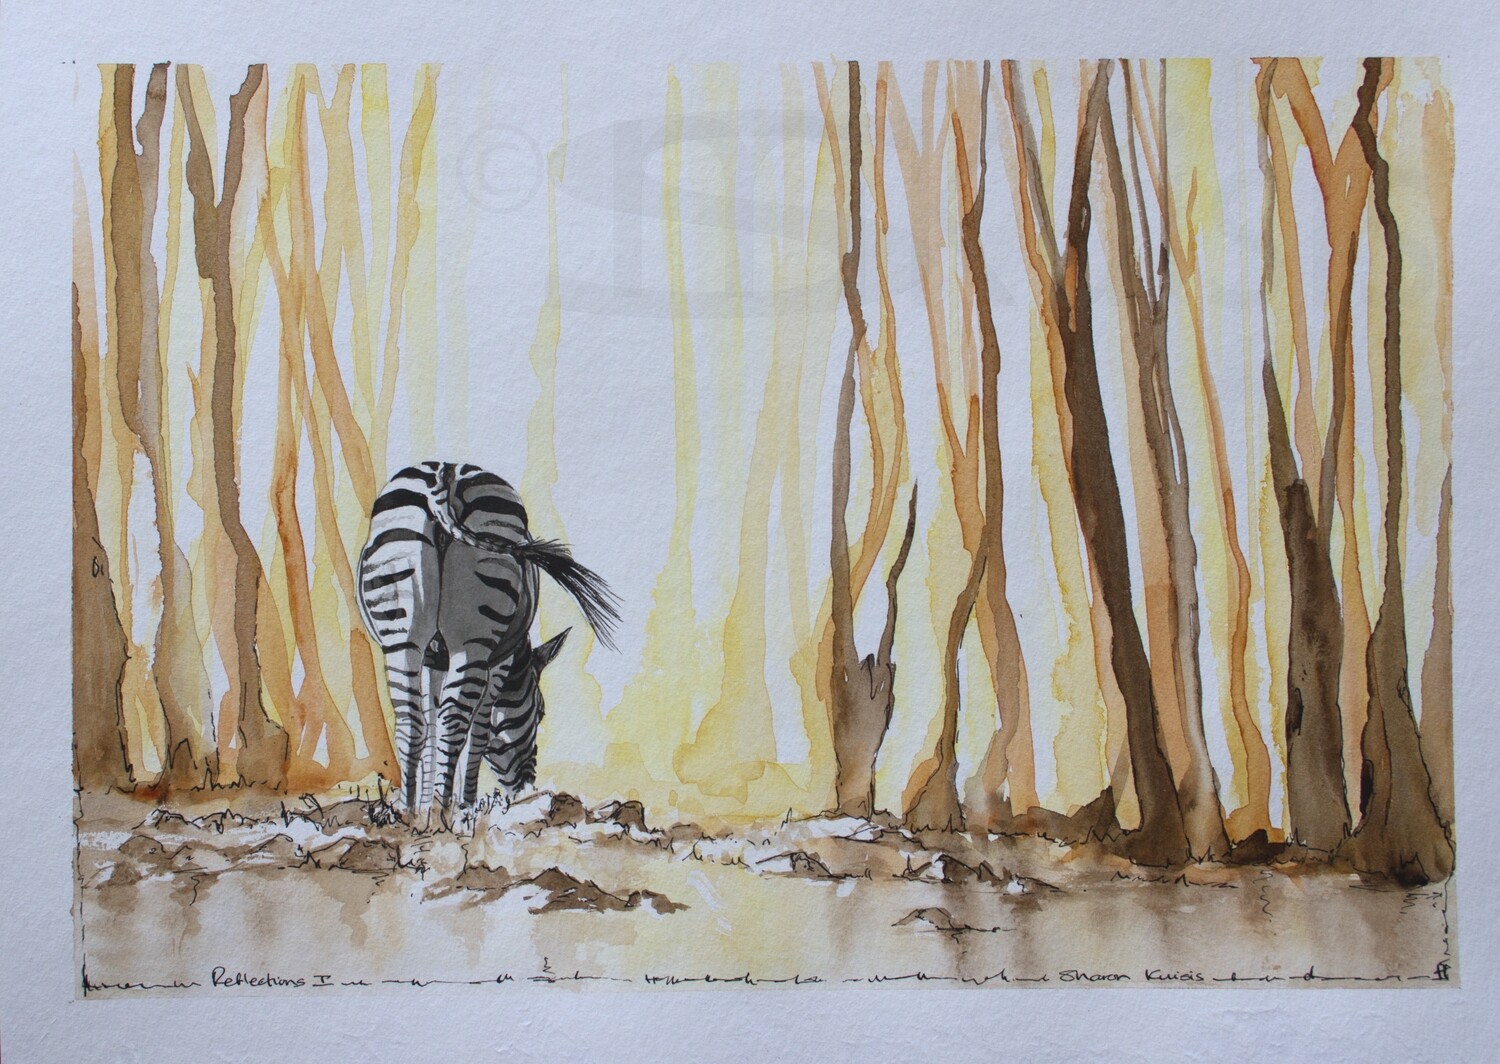 Zebra Walk